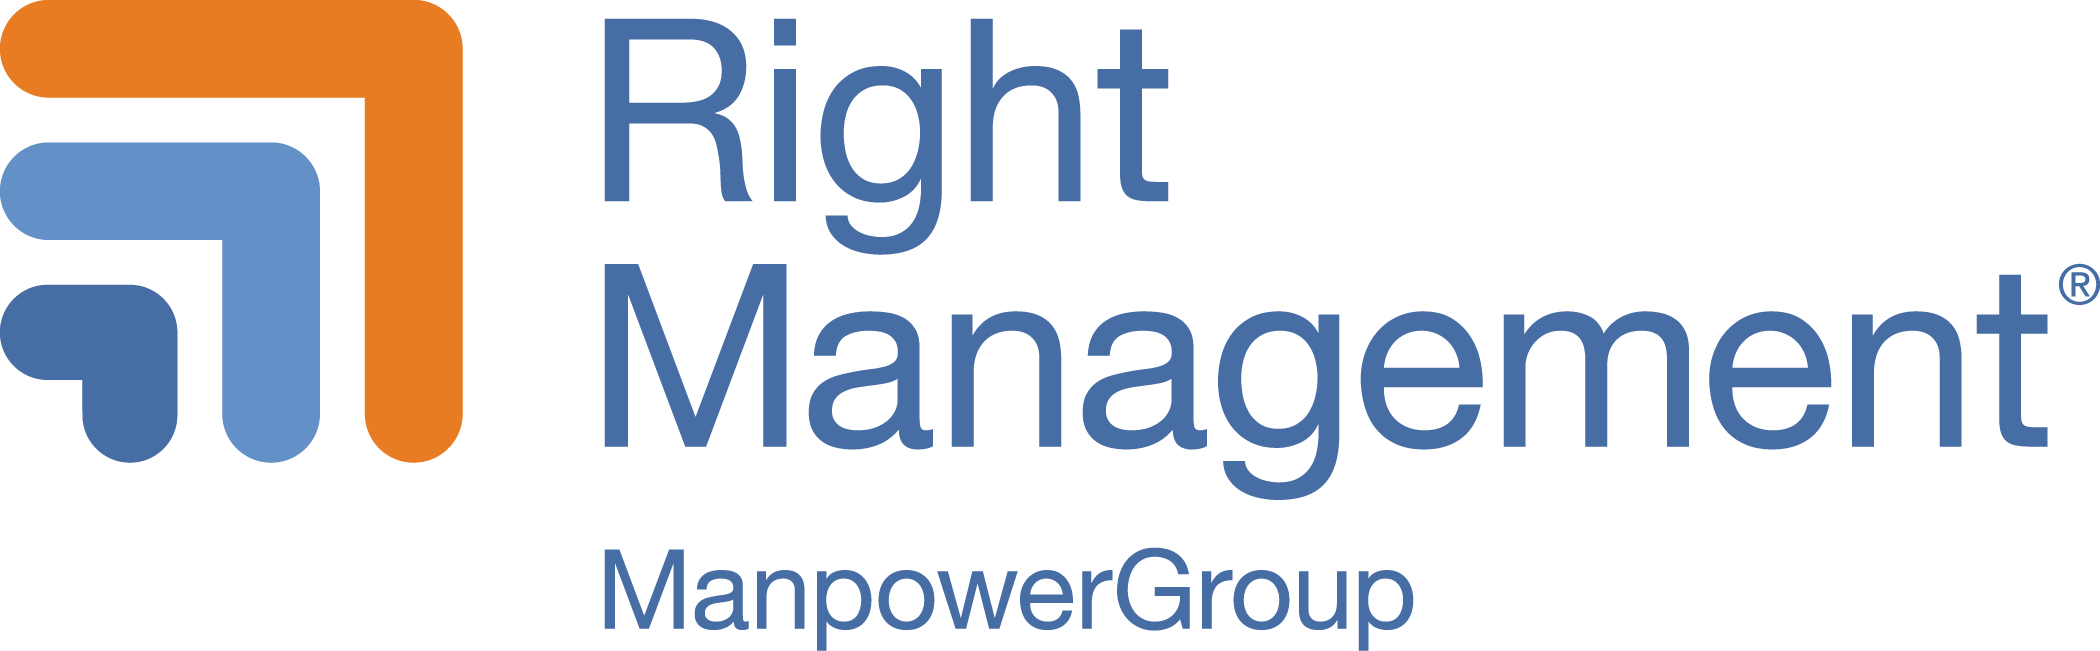 Manpower Group logo